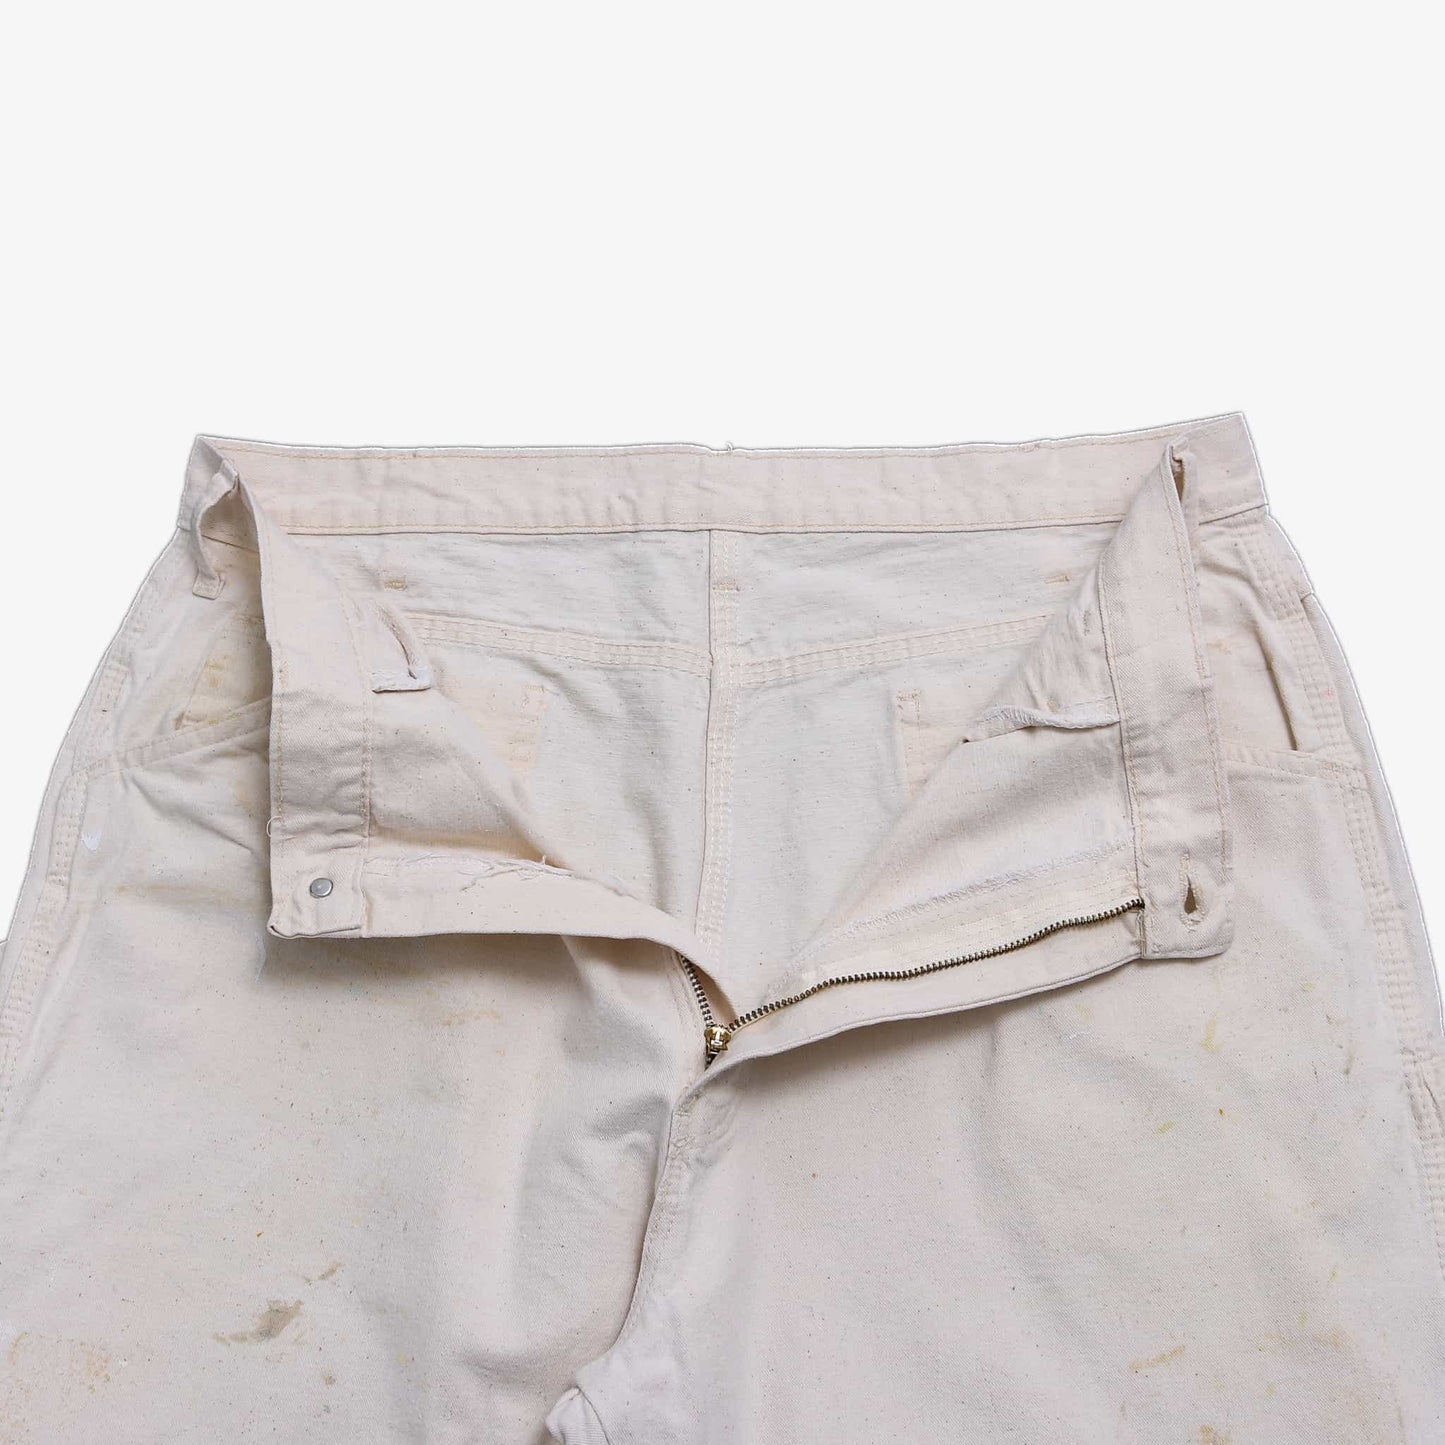 Vintage Carpenter Pants - White - 34/28 - American Madness